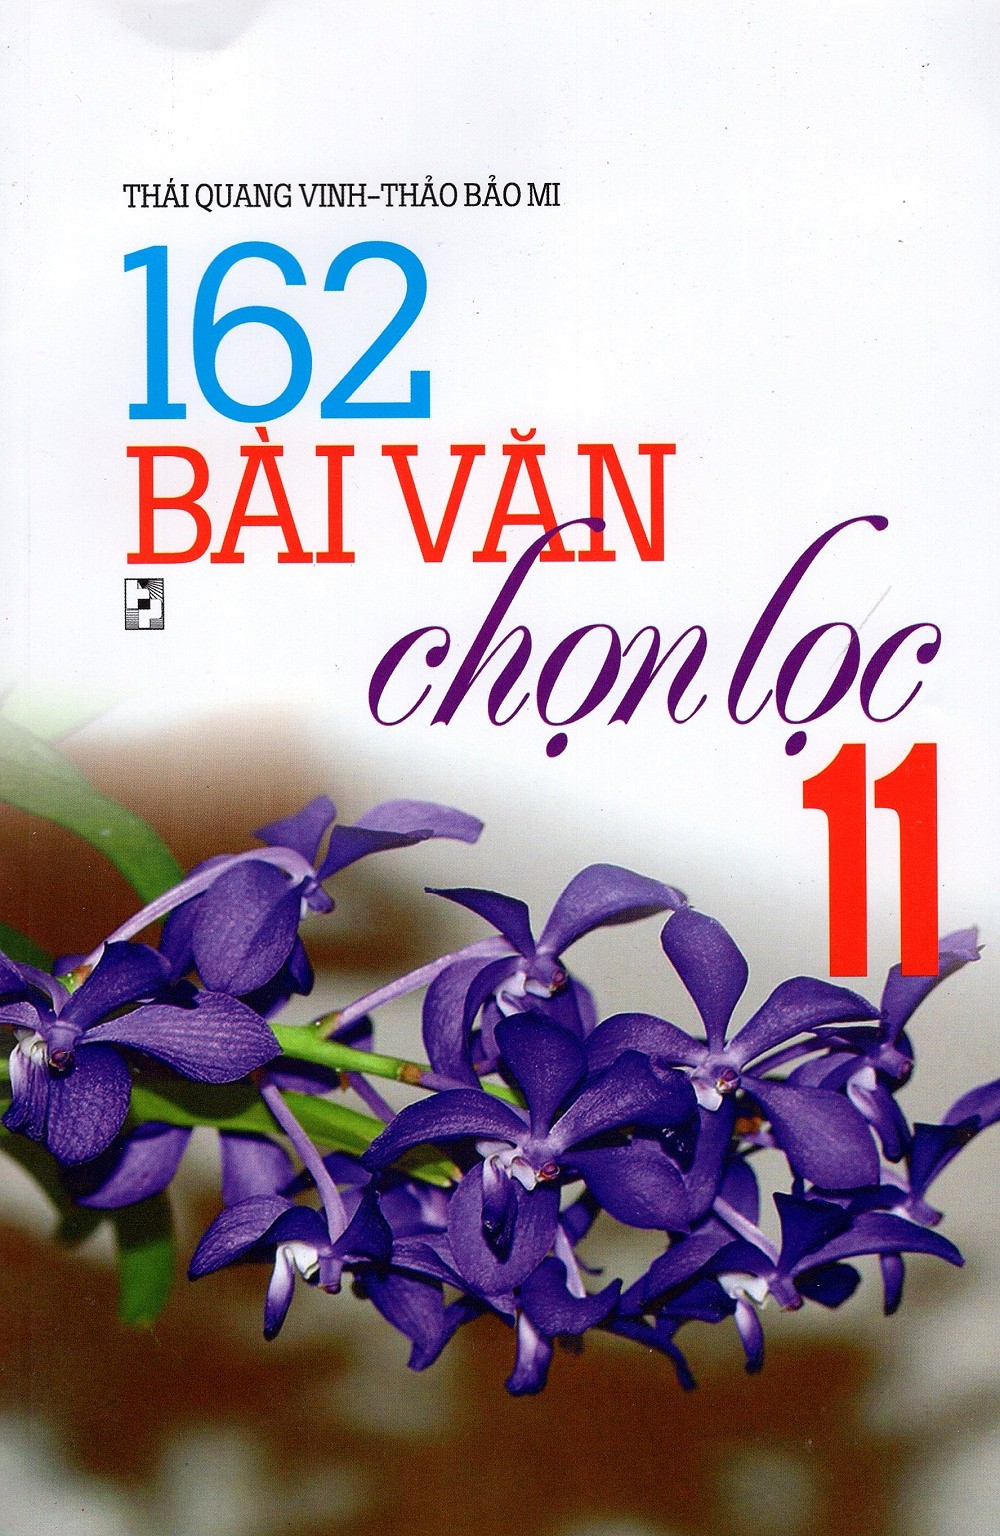 162-bai-van-chon-loc-lop-11-